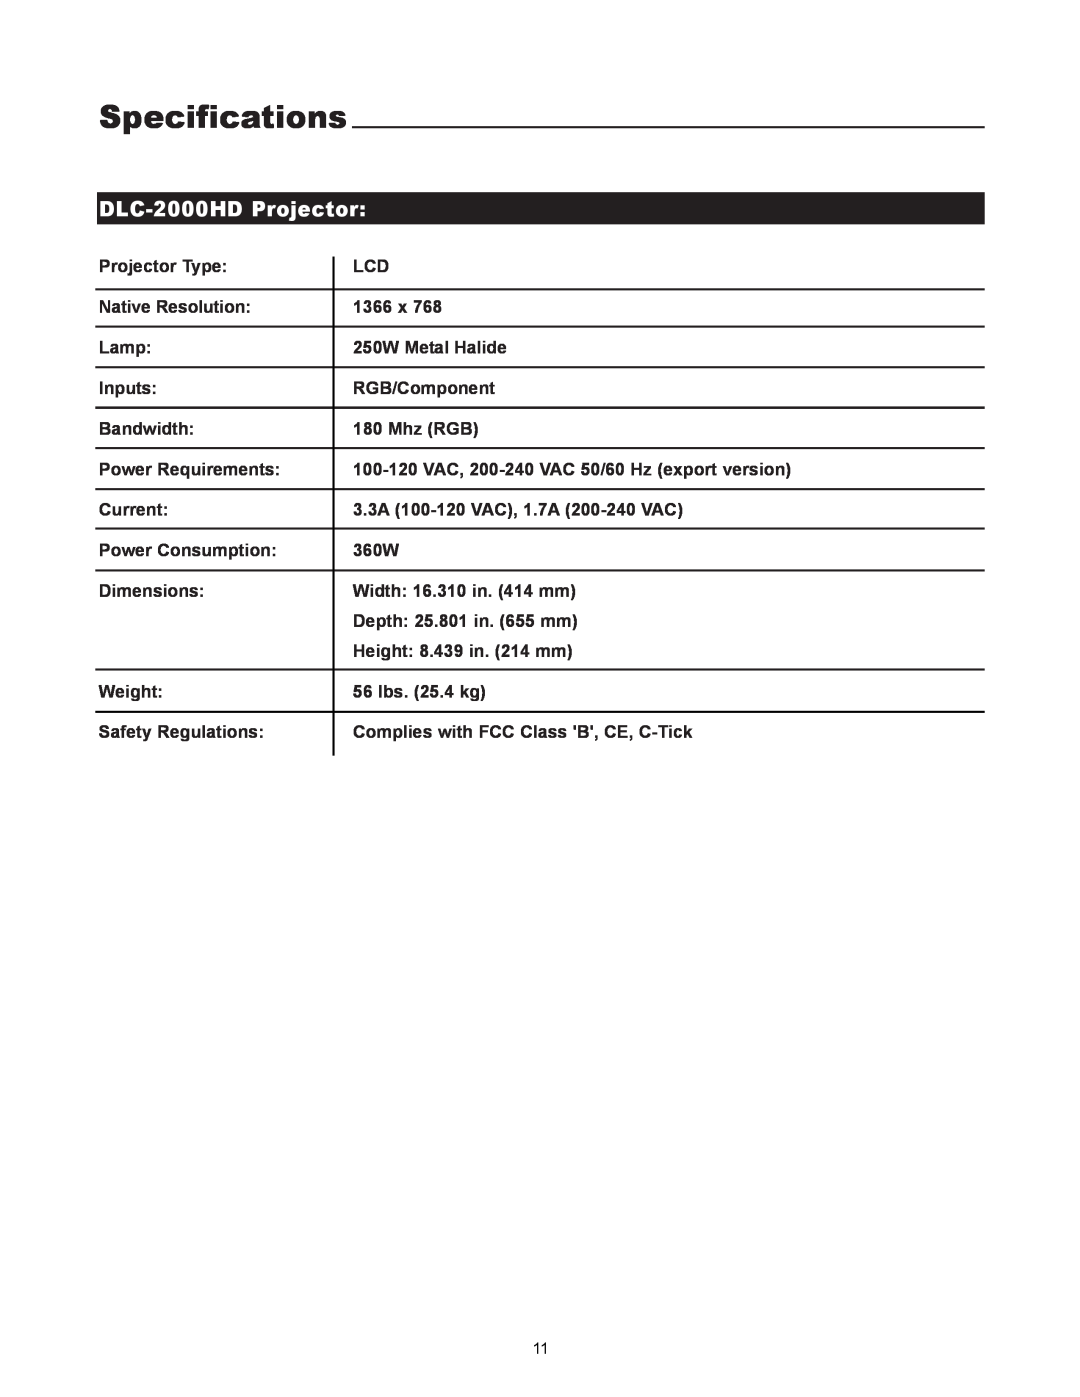 Runco user manual Specifications, DLC-2000HD Projector 